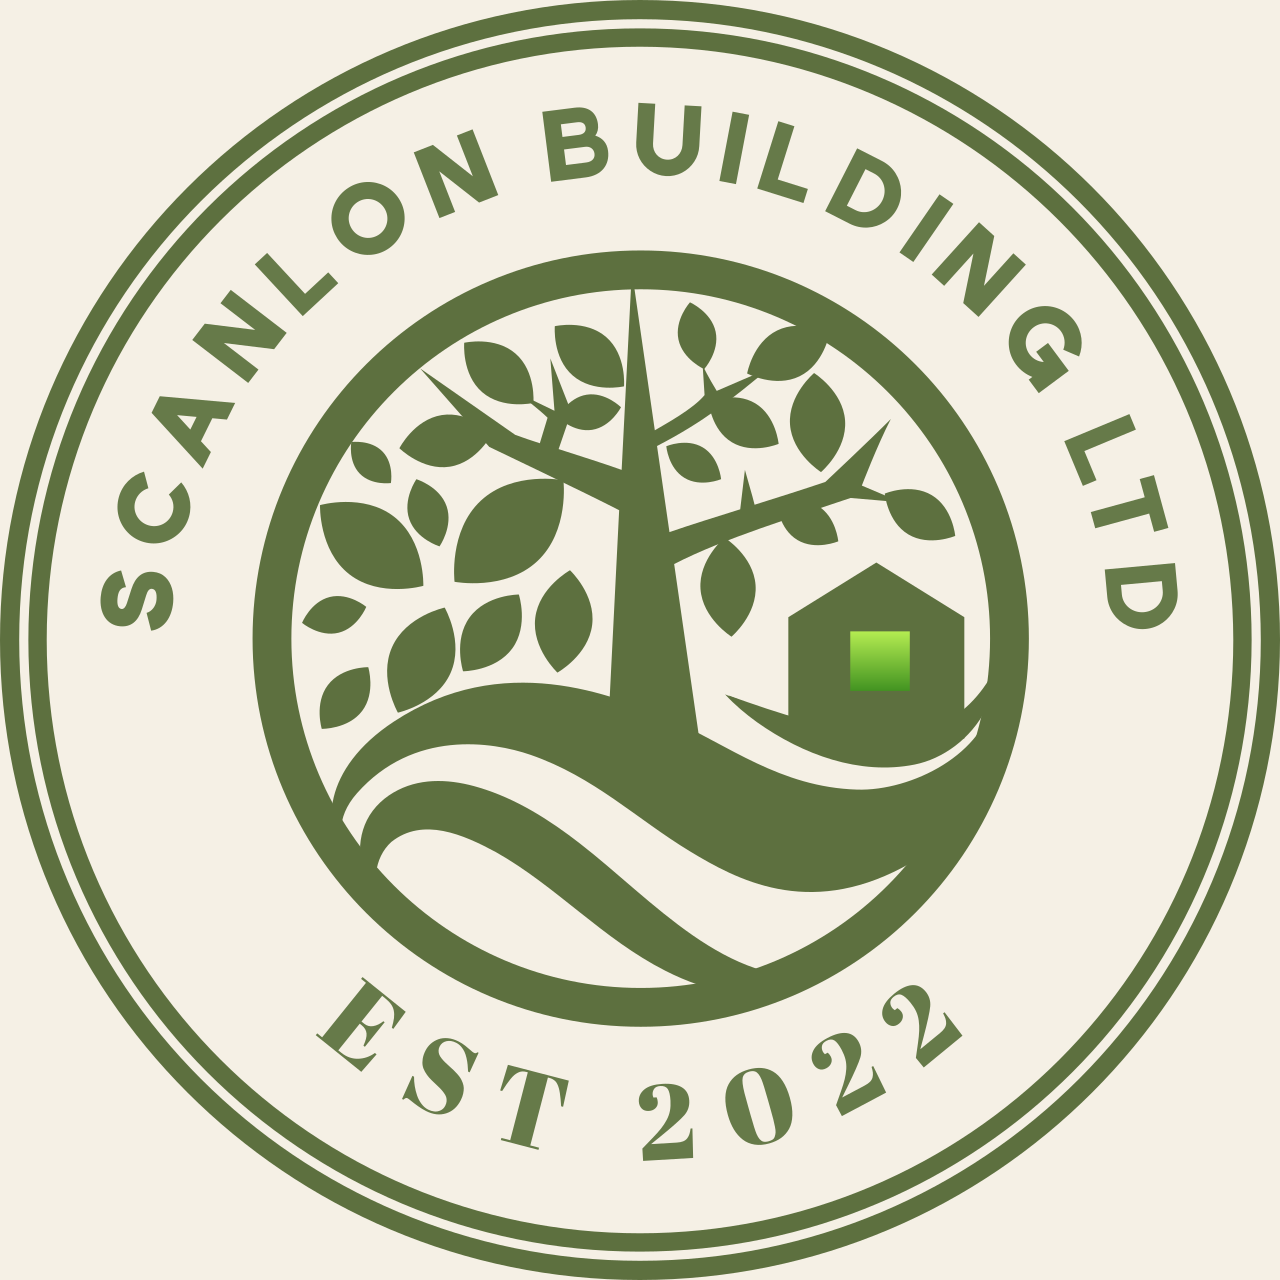 SCANLON BUILDING LTD's logo